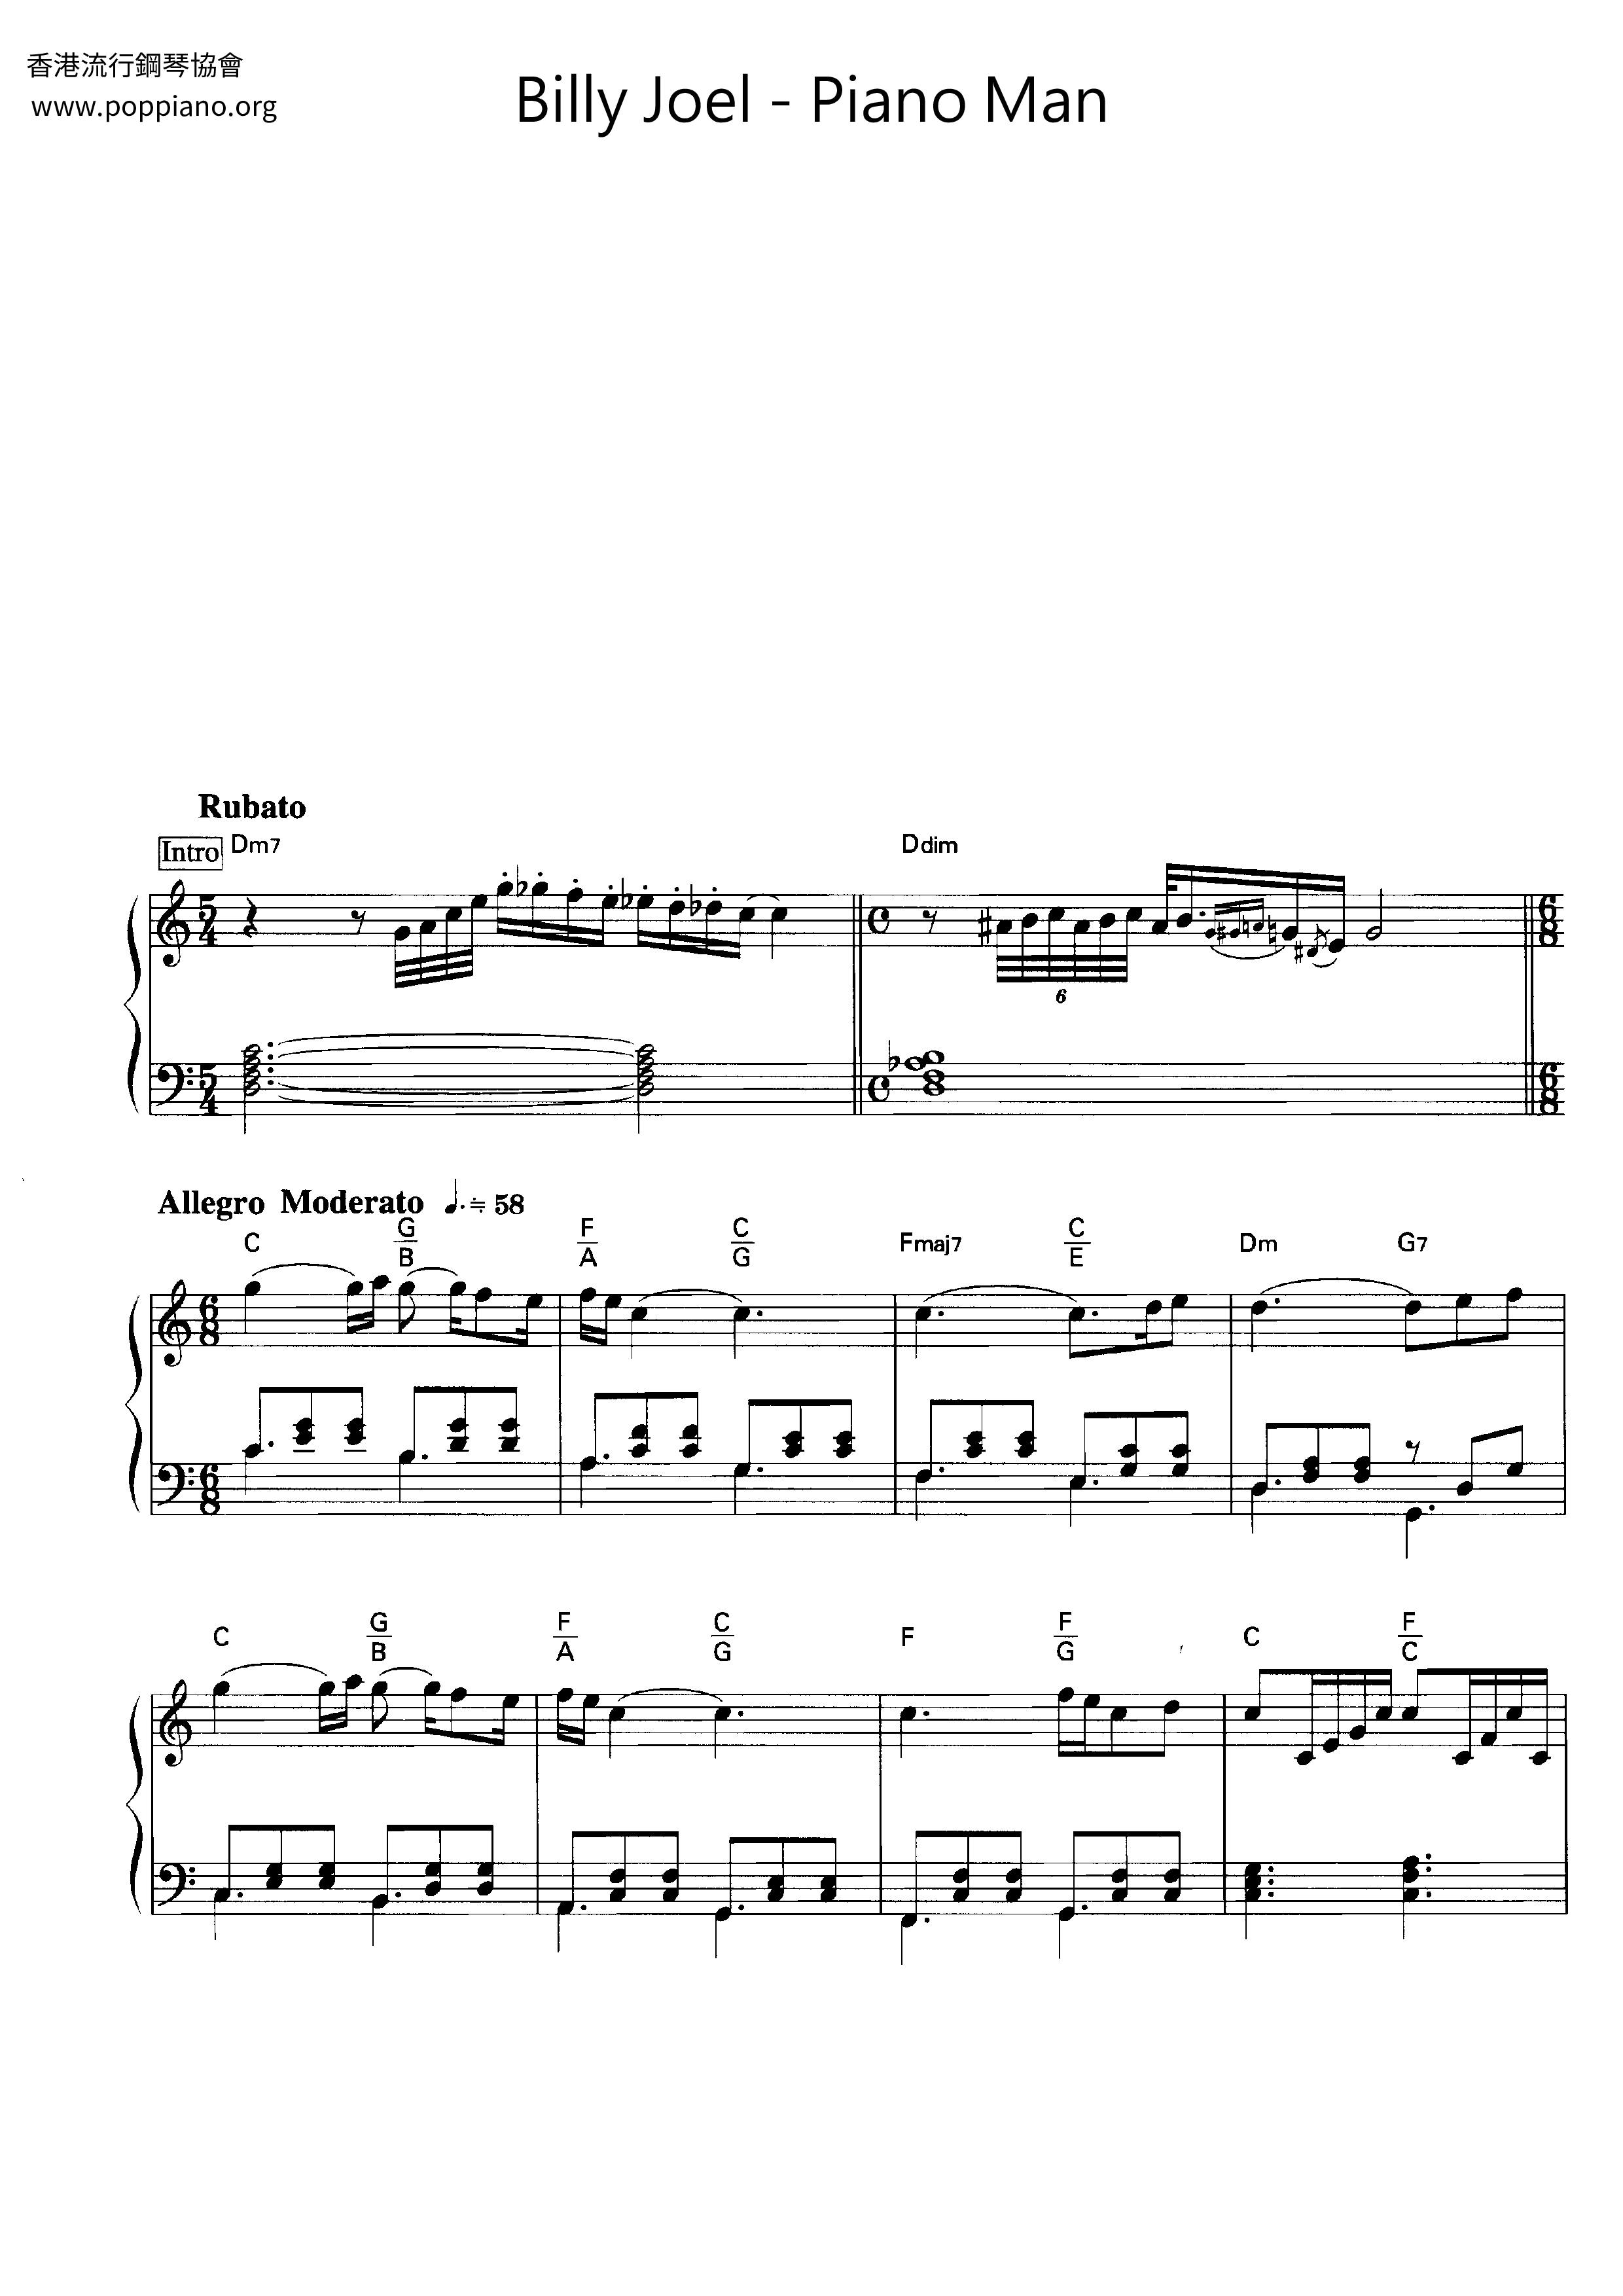 Piano Man Score